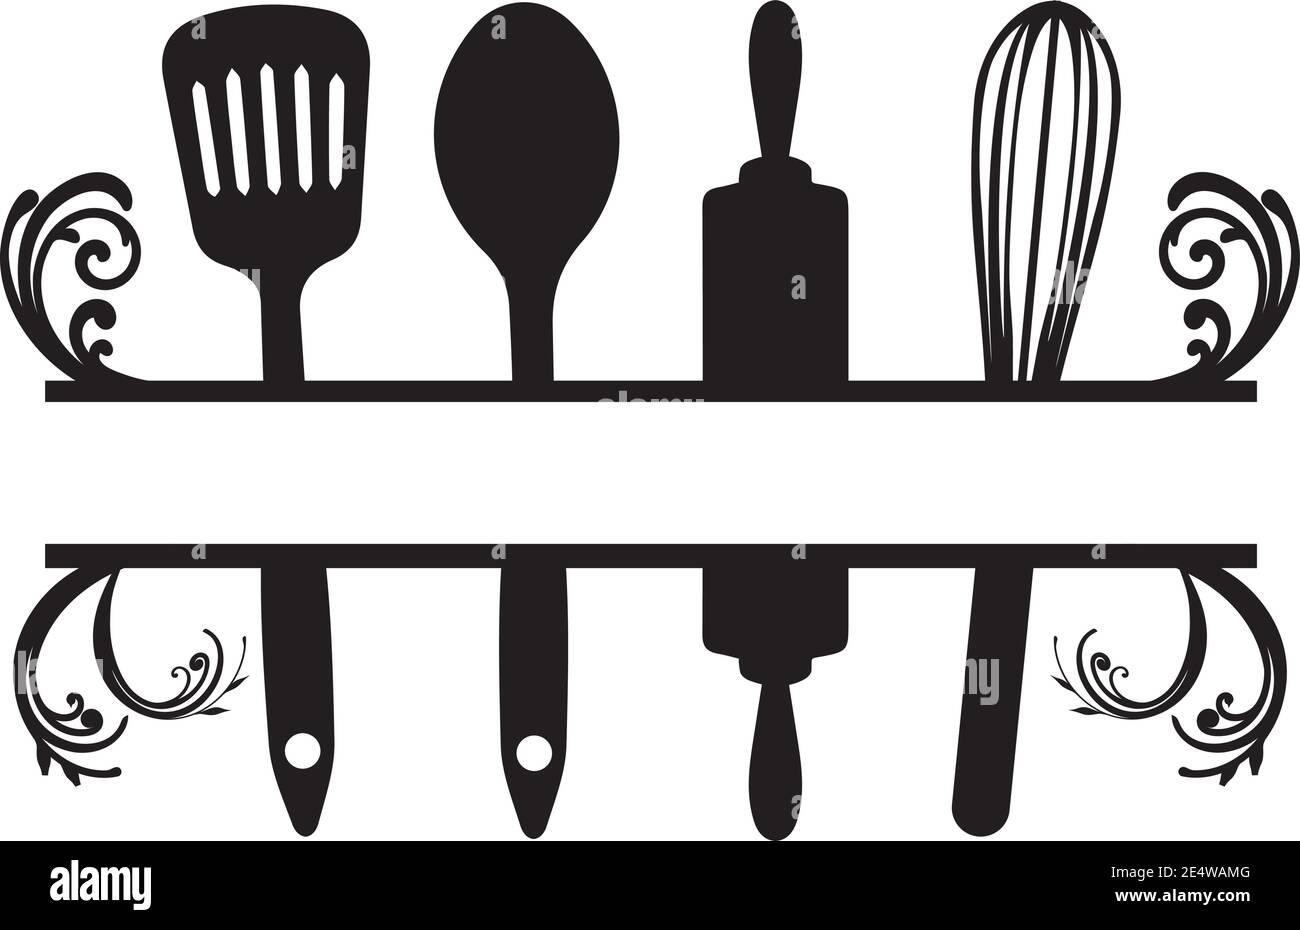 https://c8.alamy.com/compes/2e4wamg/ilustracion-vectorial-de-utensilios-de-cocina-aislados-sobre-fondo-blanco-2e4wamg.jpg